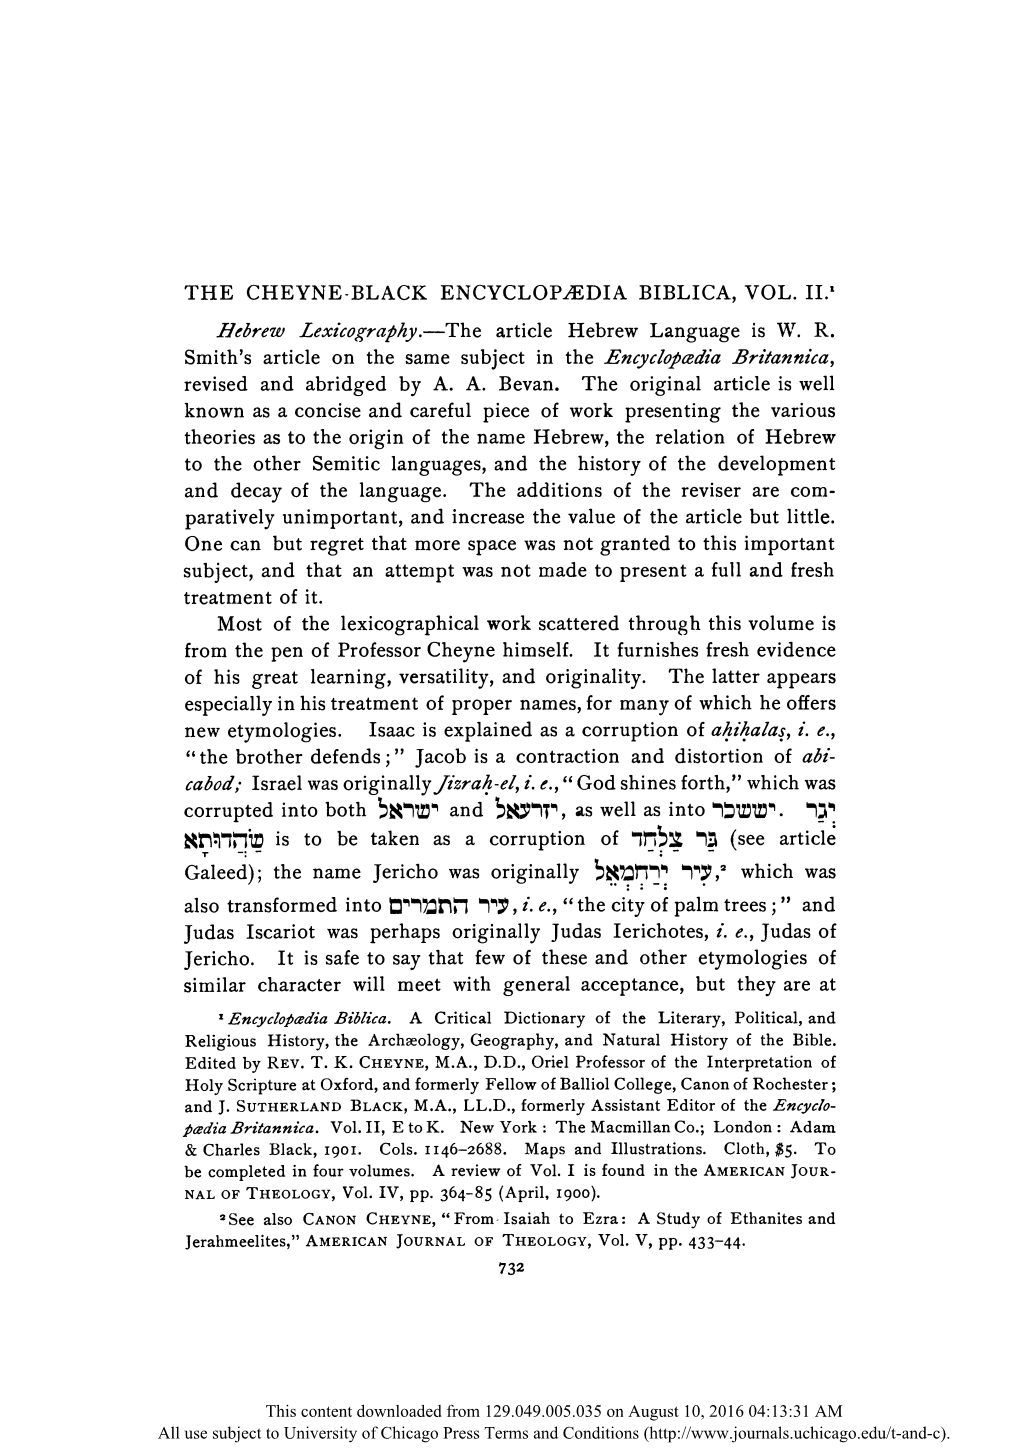 The Cheyne-Black Encyclopædia Biblica, Vol. II